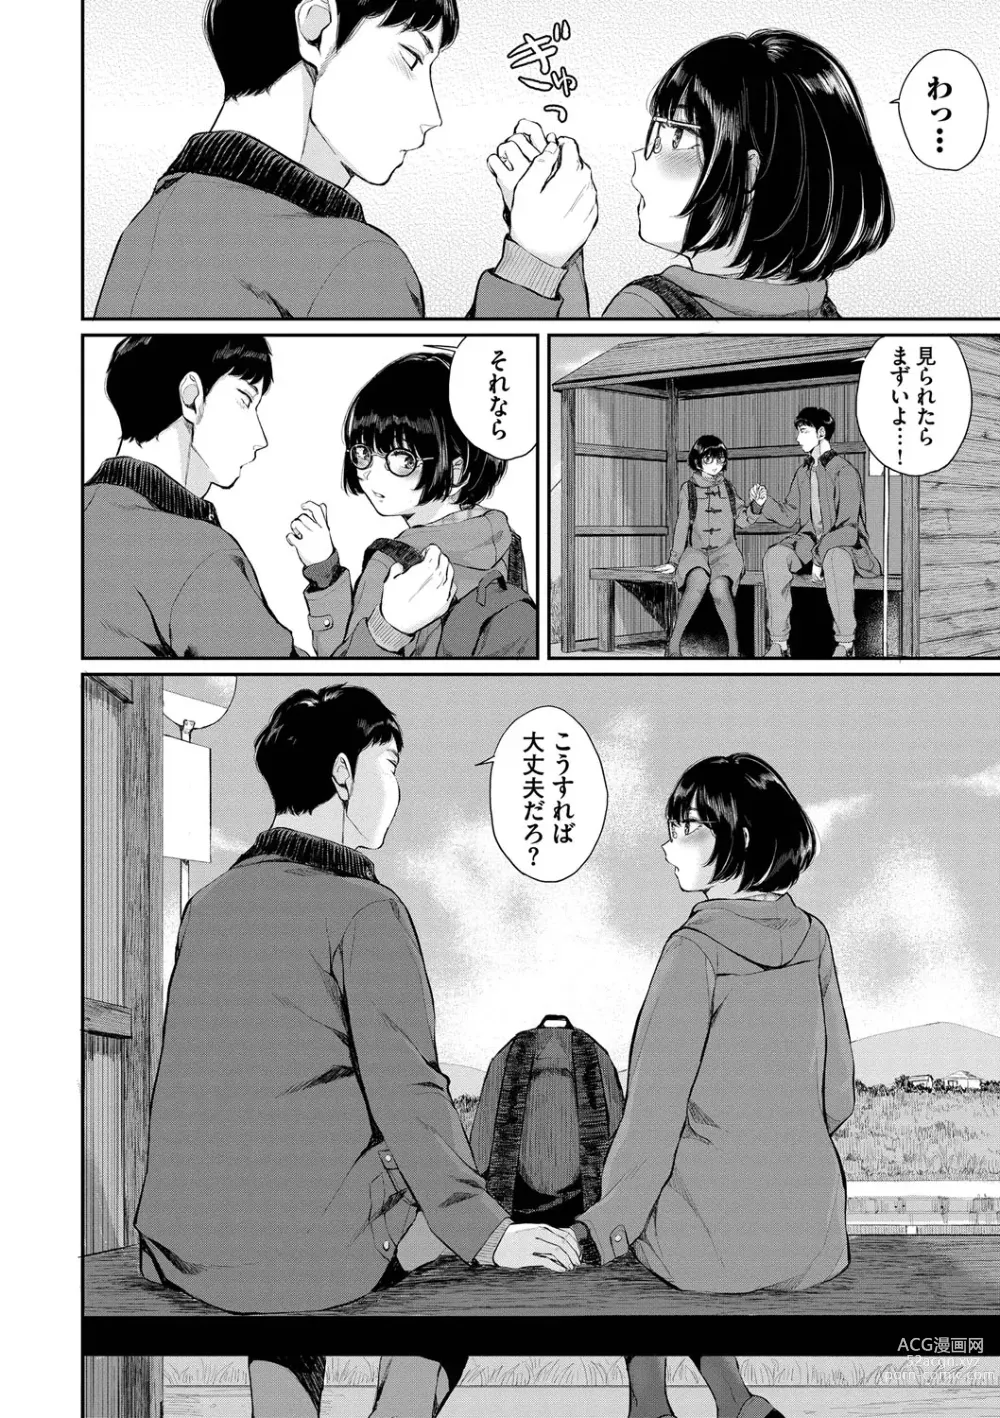 Page 7 of manga Futariai